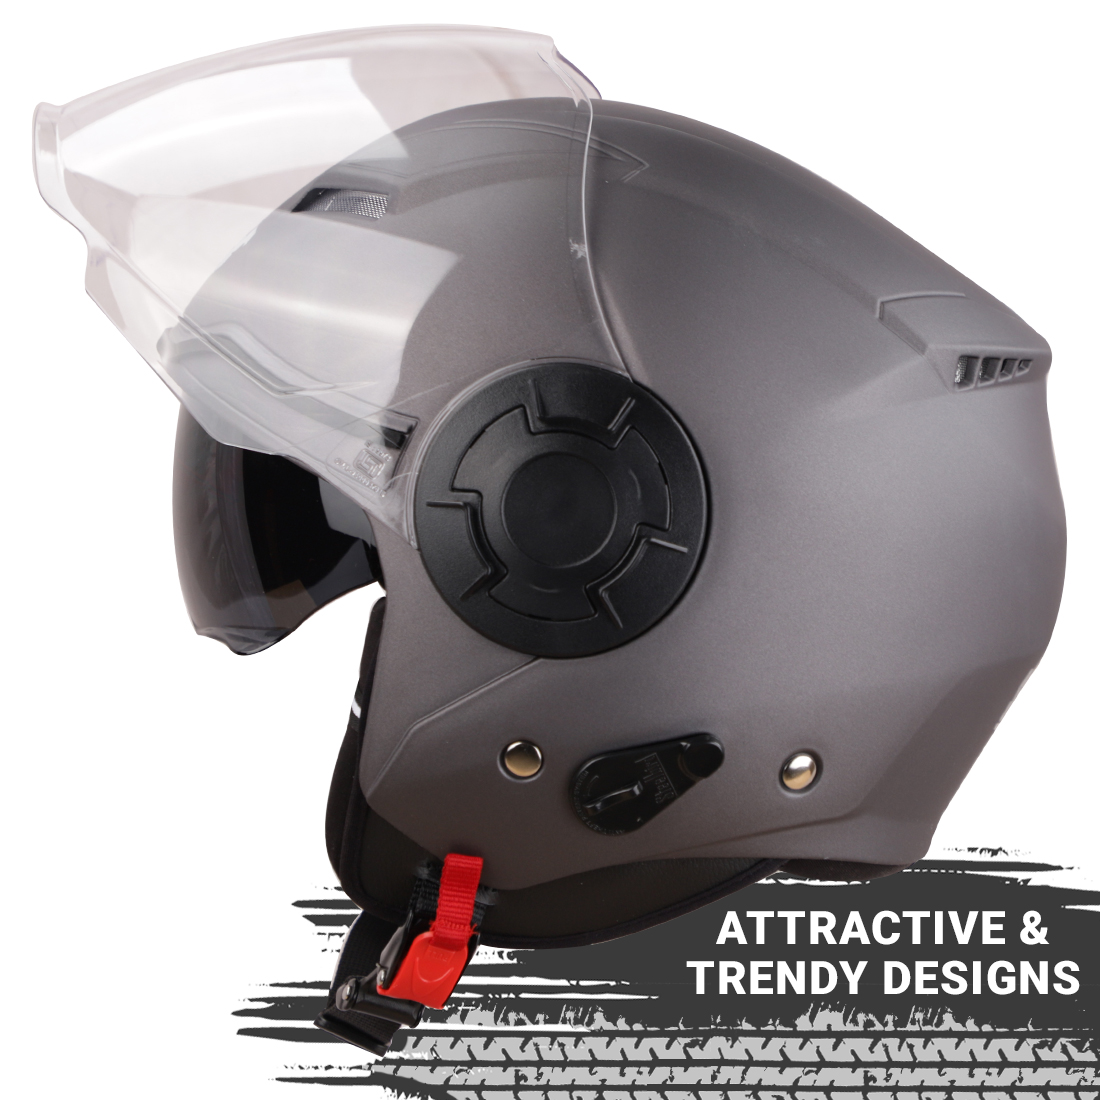 Steelbird GT ISI Certified Open Face Helmet For Men And Women With Inner Sun Shield ( Dual Visor Mechanism ) (Matt H.Grey)